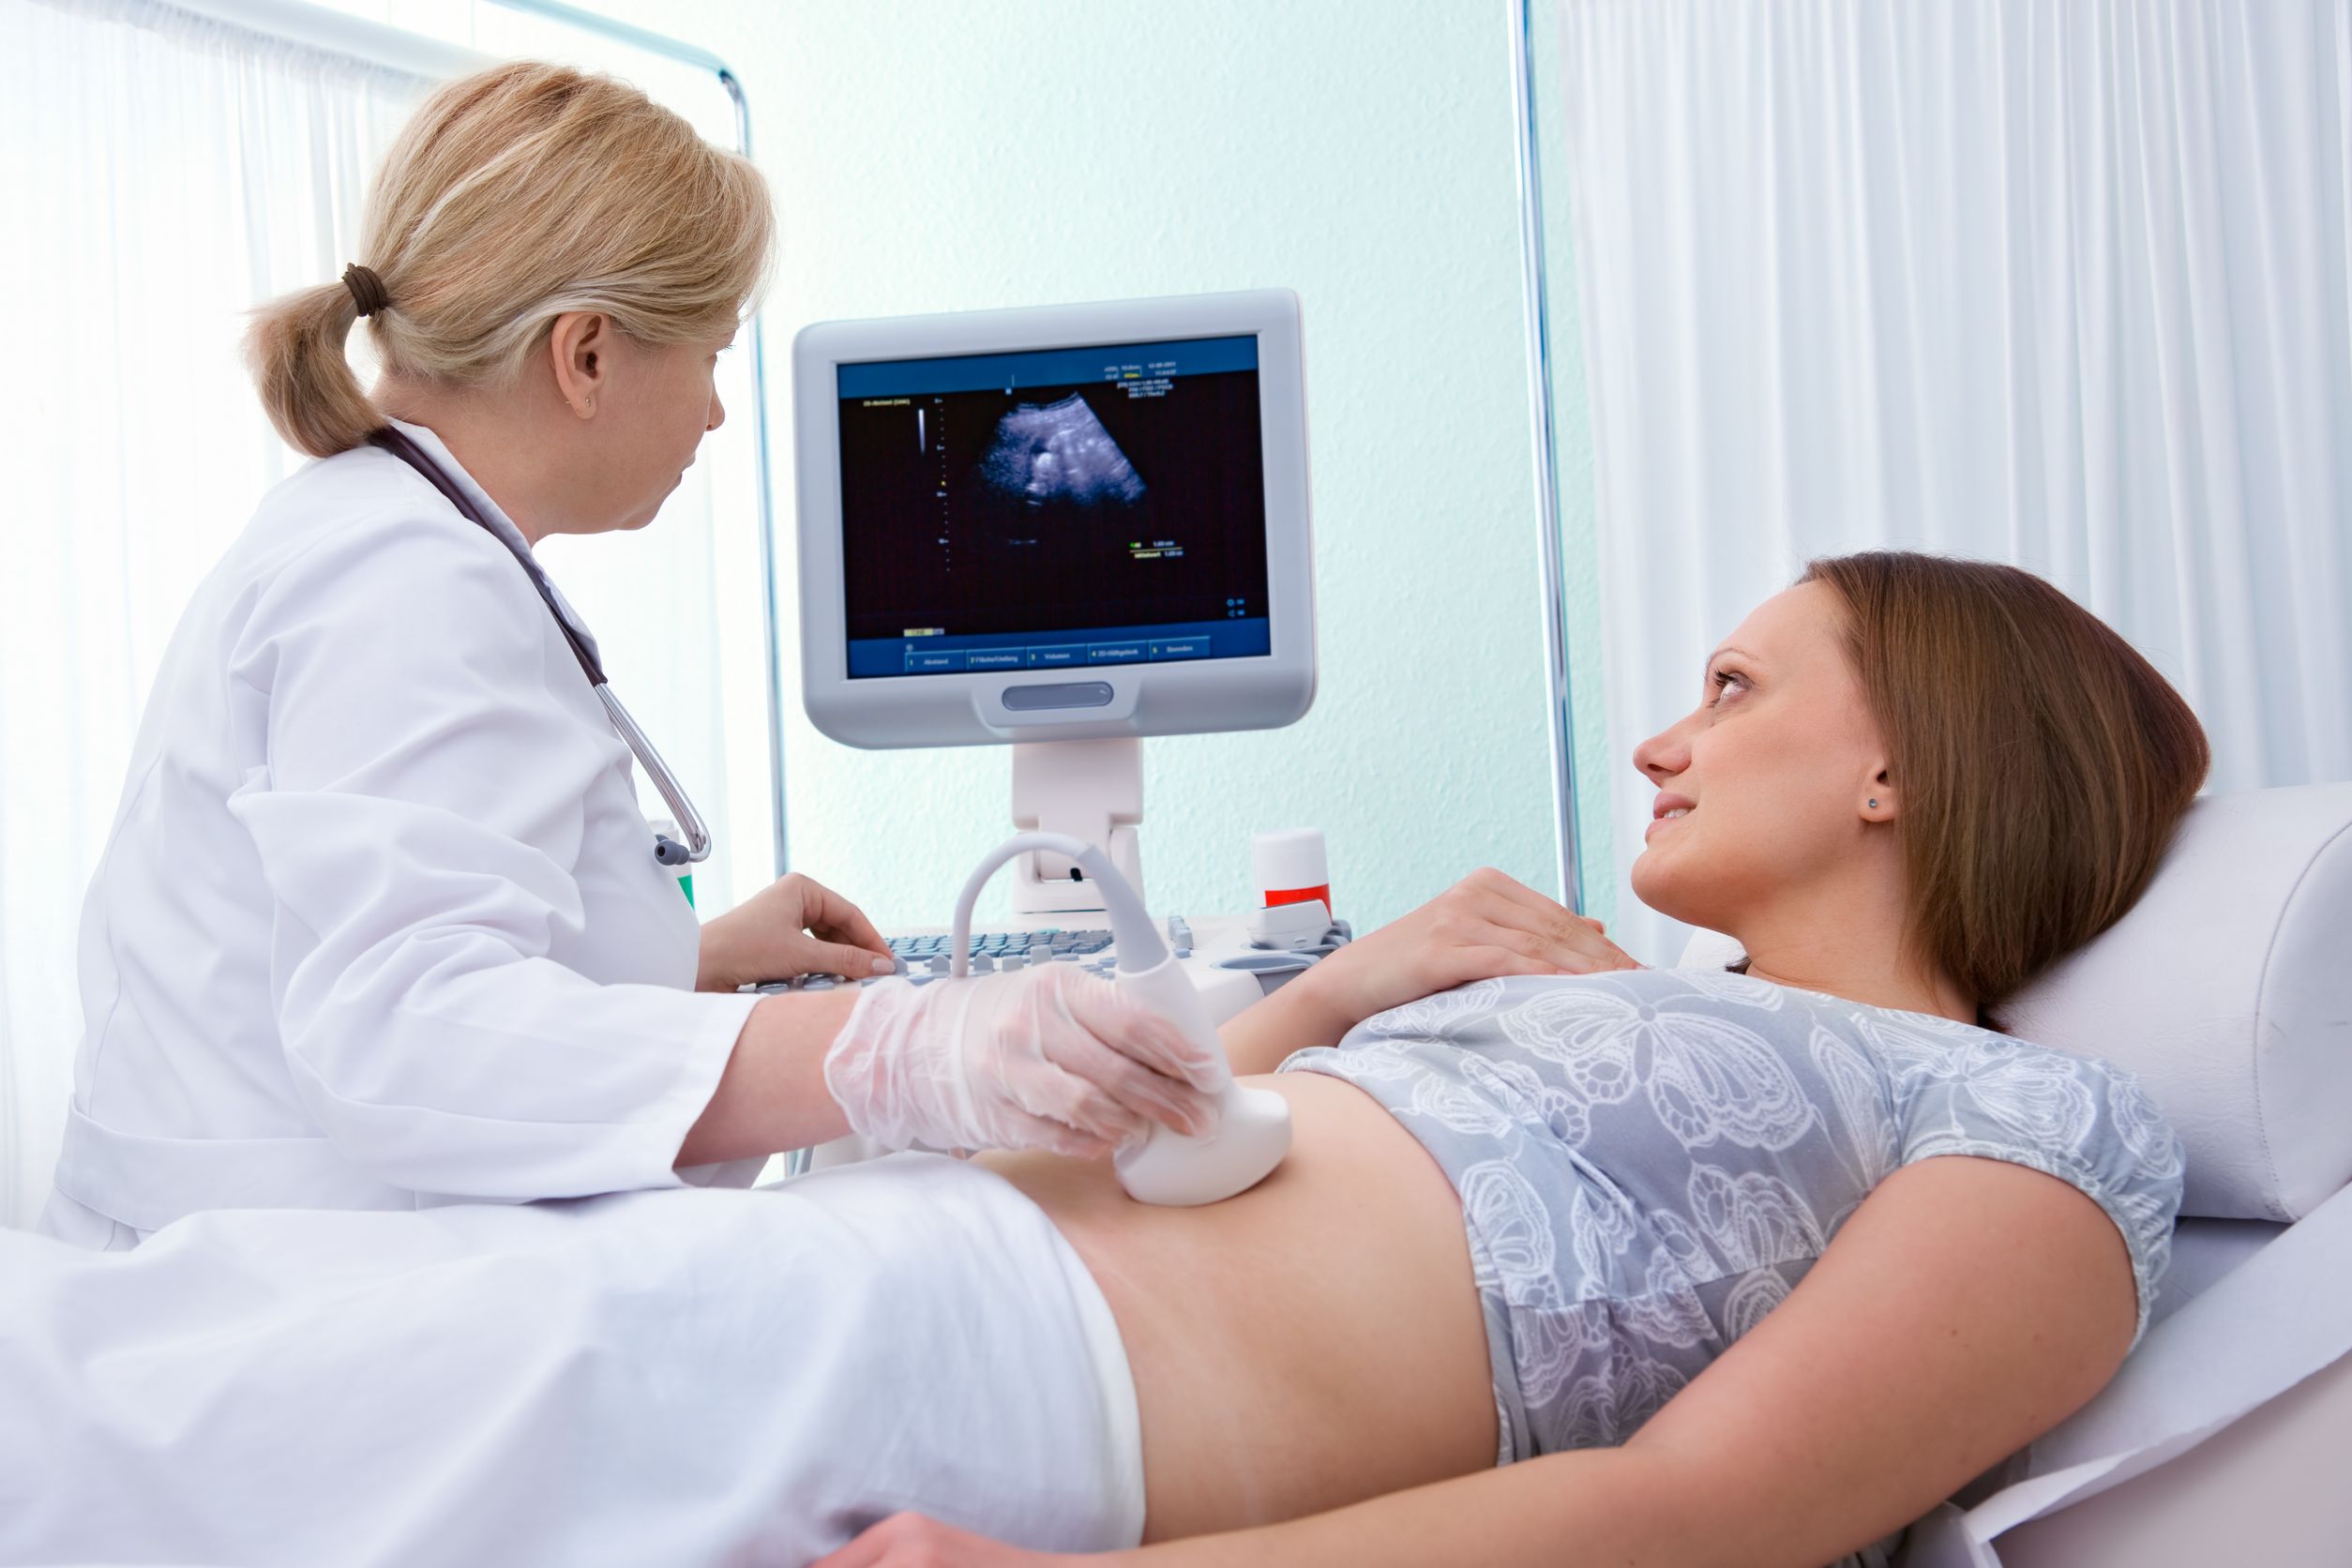 preganant woman ultrasound